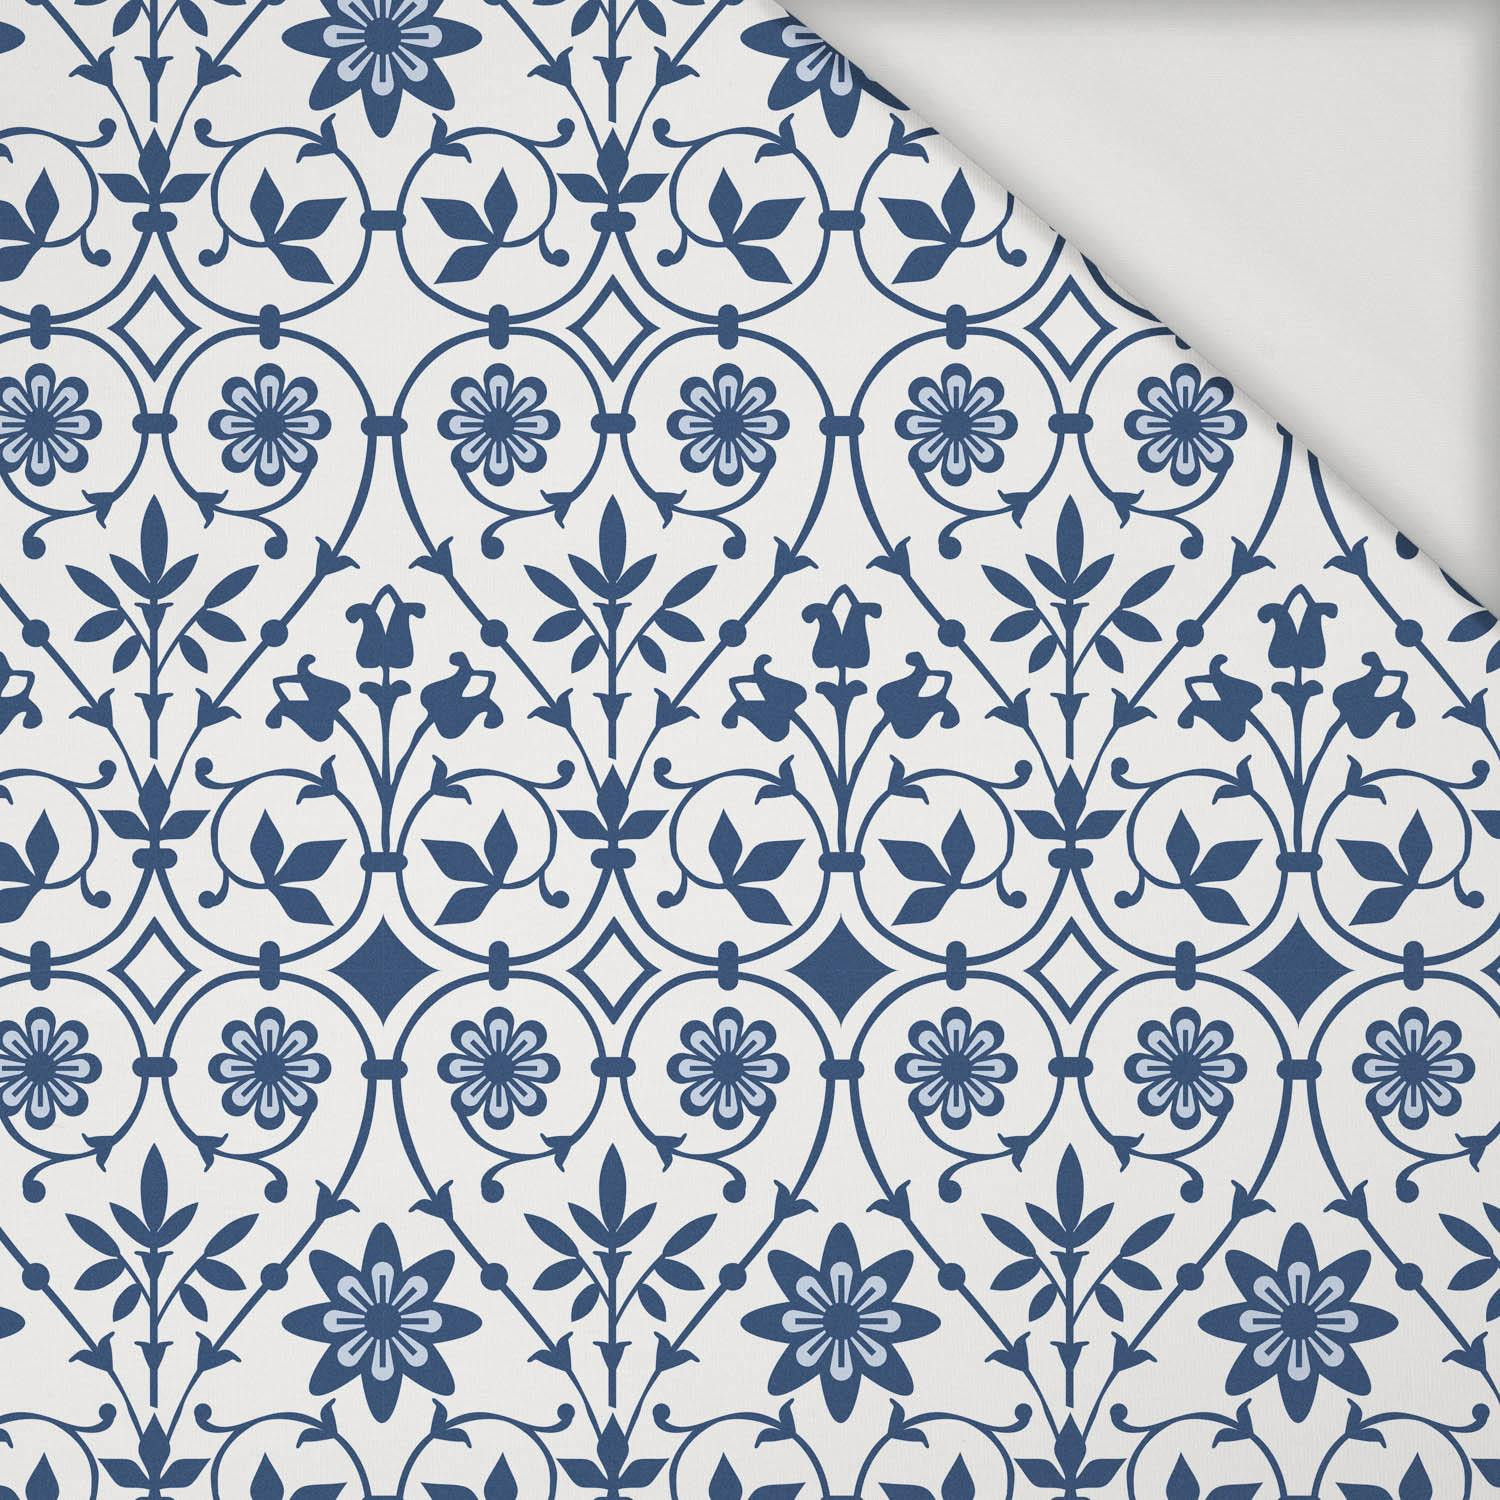 FLOWERS pattern no. 1 (classic blue) - Viscose jersey